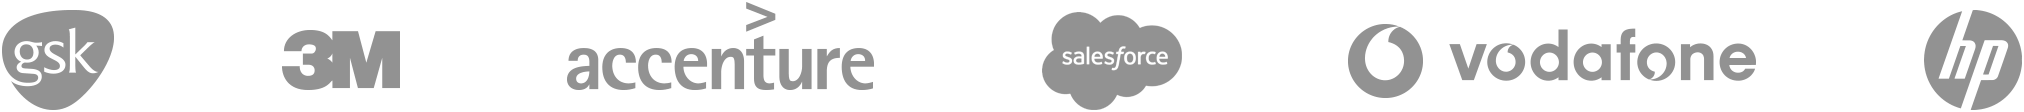 Smart Insight合作伙伴logo